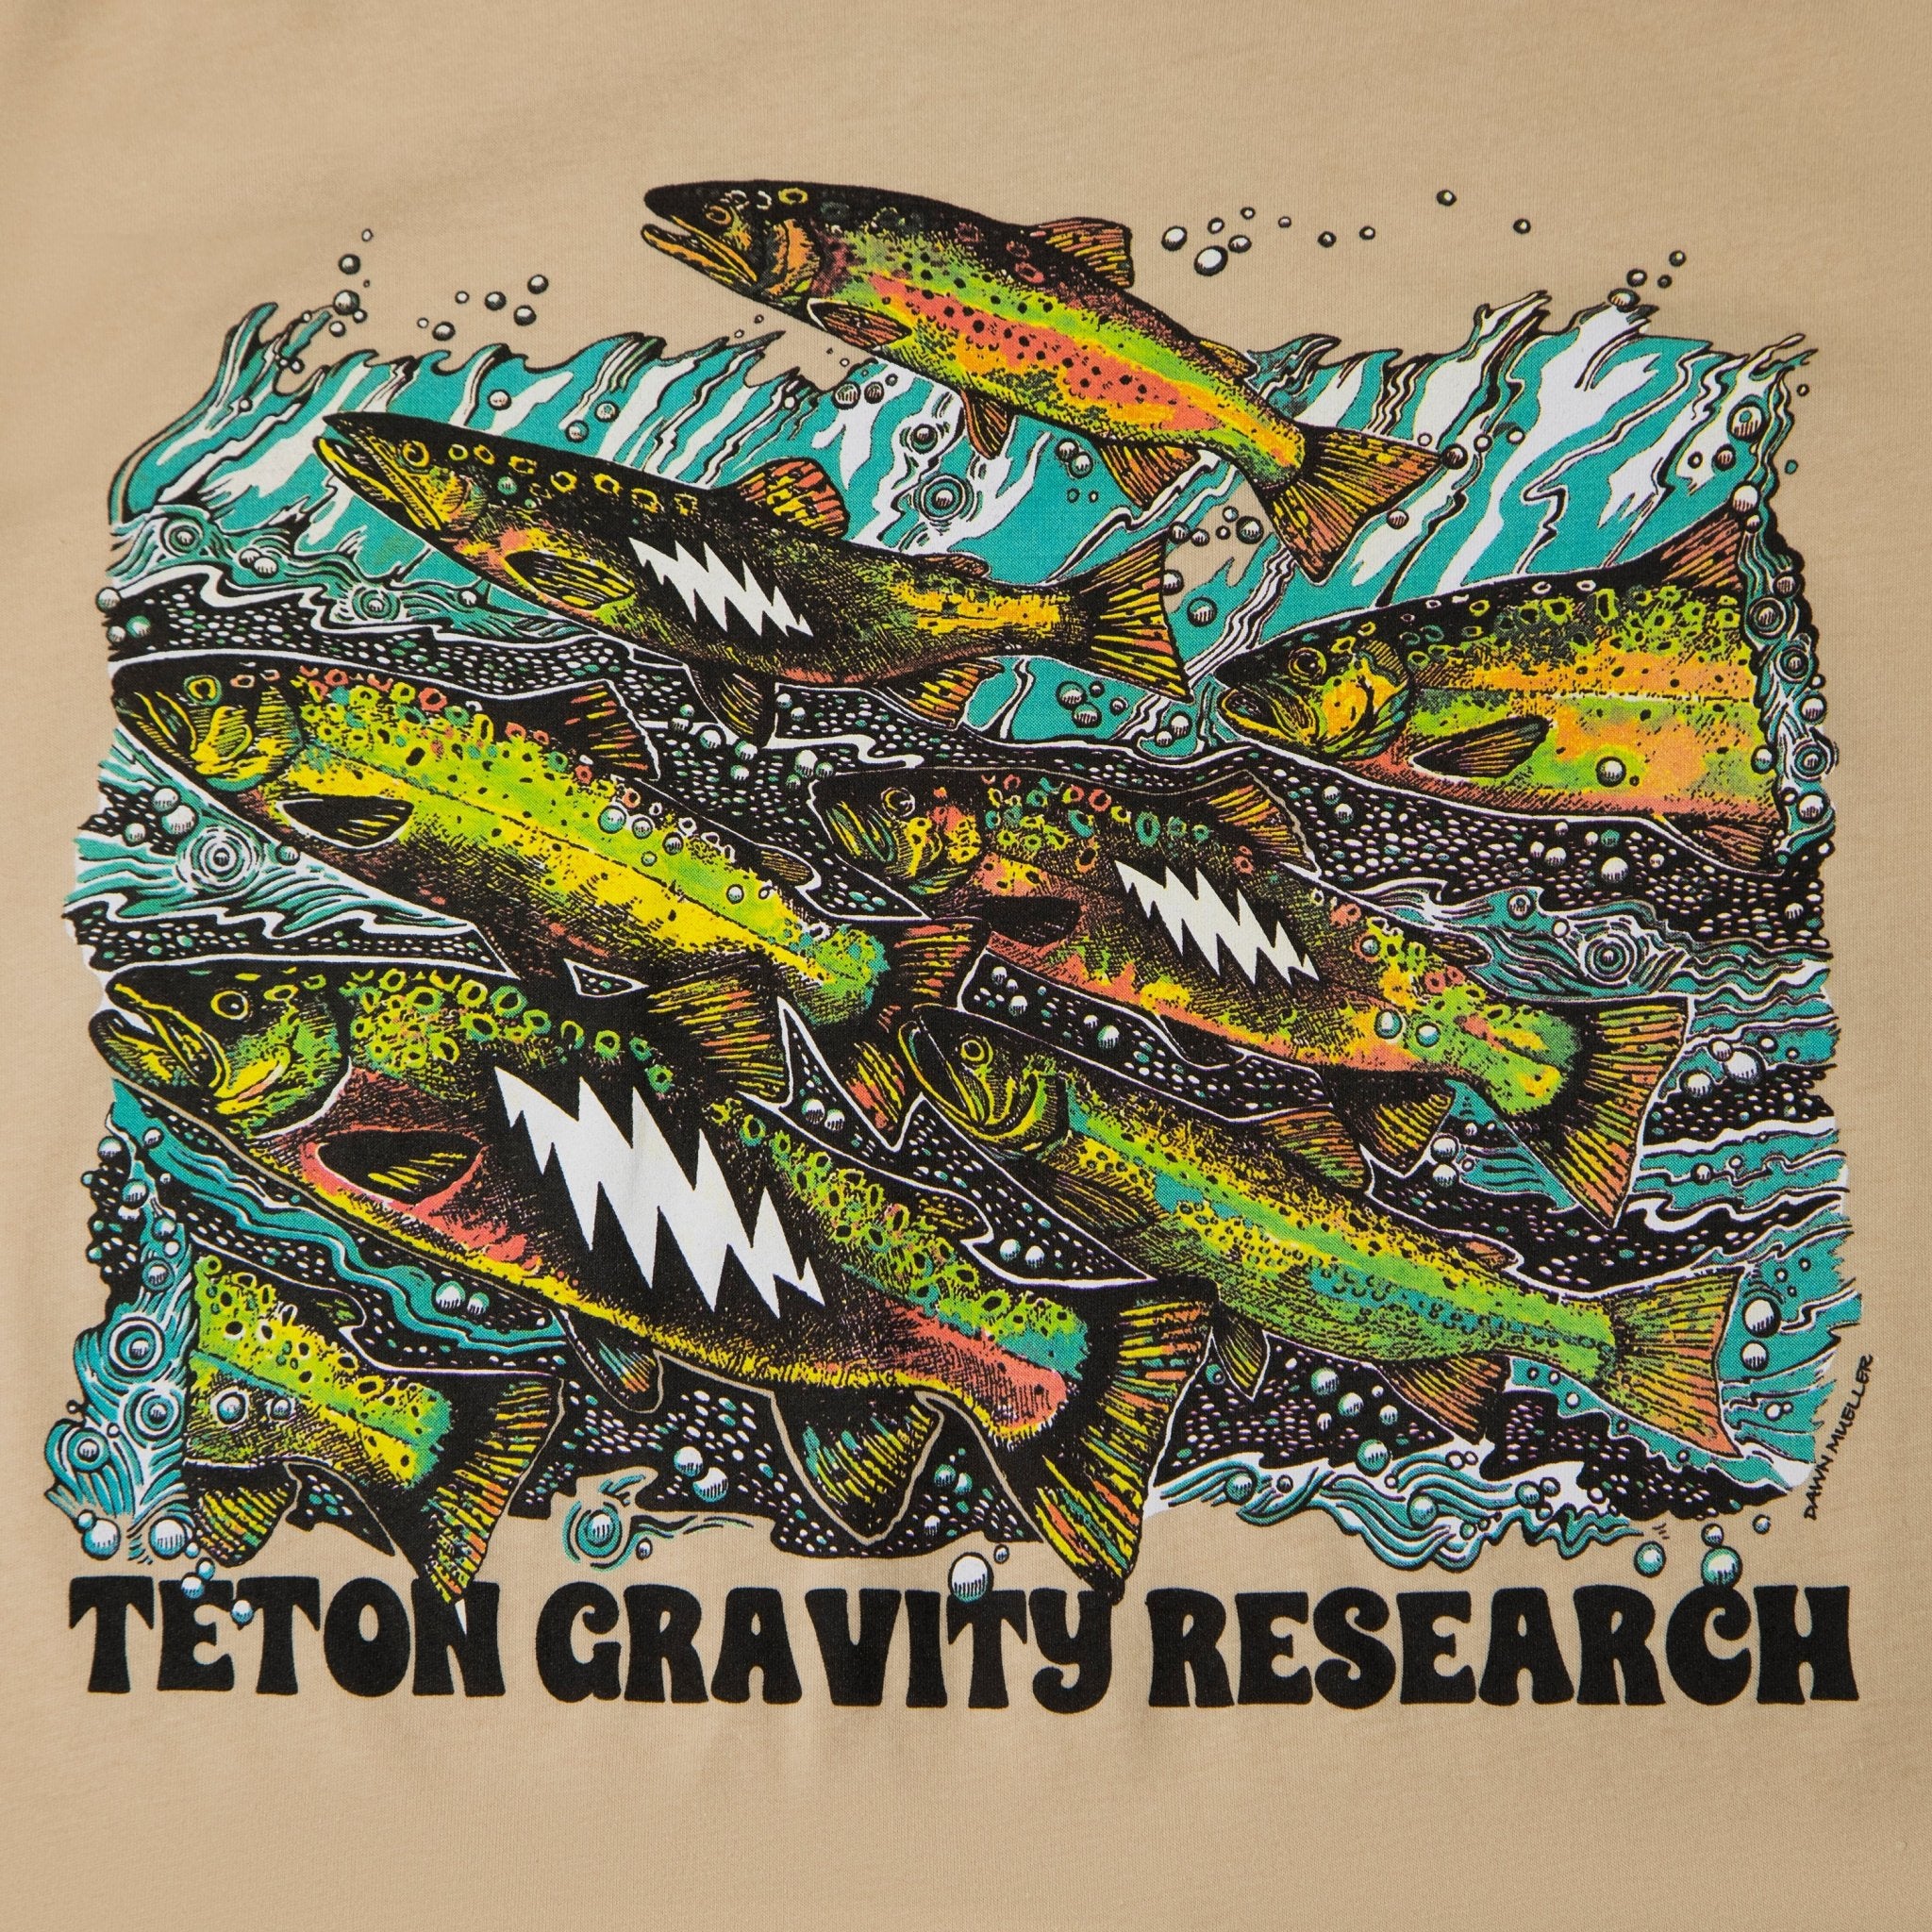 Grateful Dead x TGR “Fish Are Rising Up Like Birds” T-Shirt - Teton Gravity Research